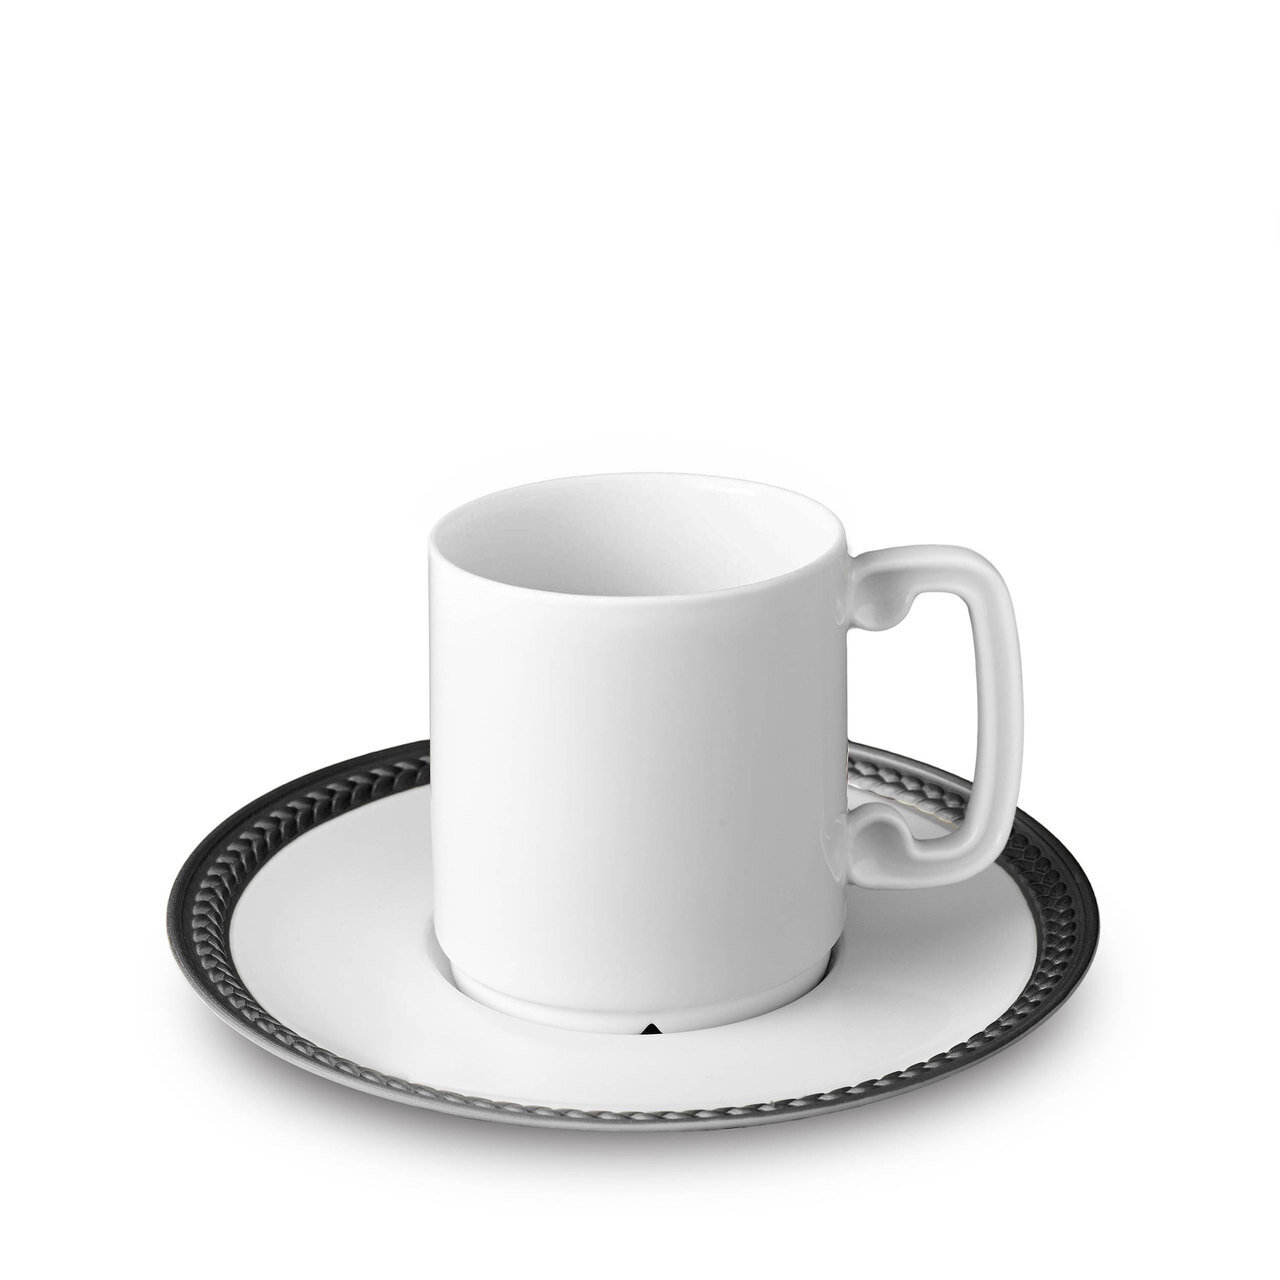 L'Objet Soie Tressee Black Espresso Cup with Saucer ST555